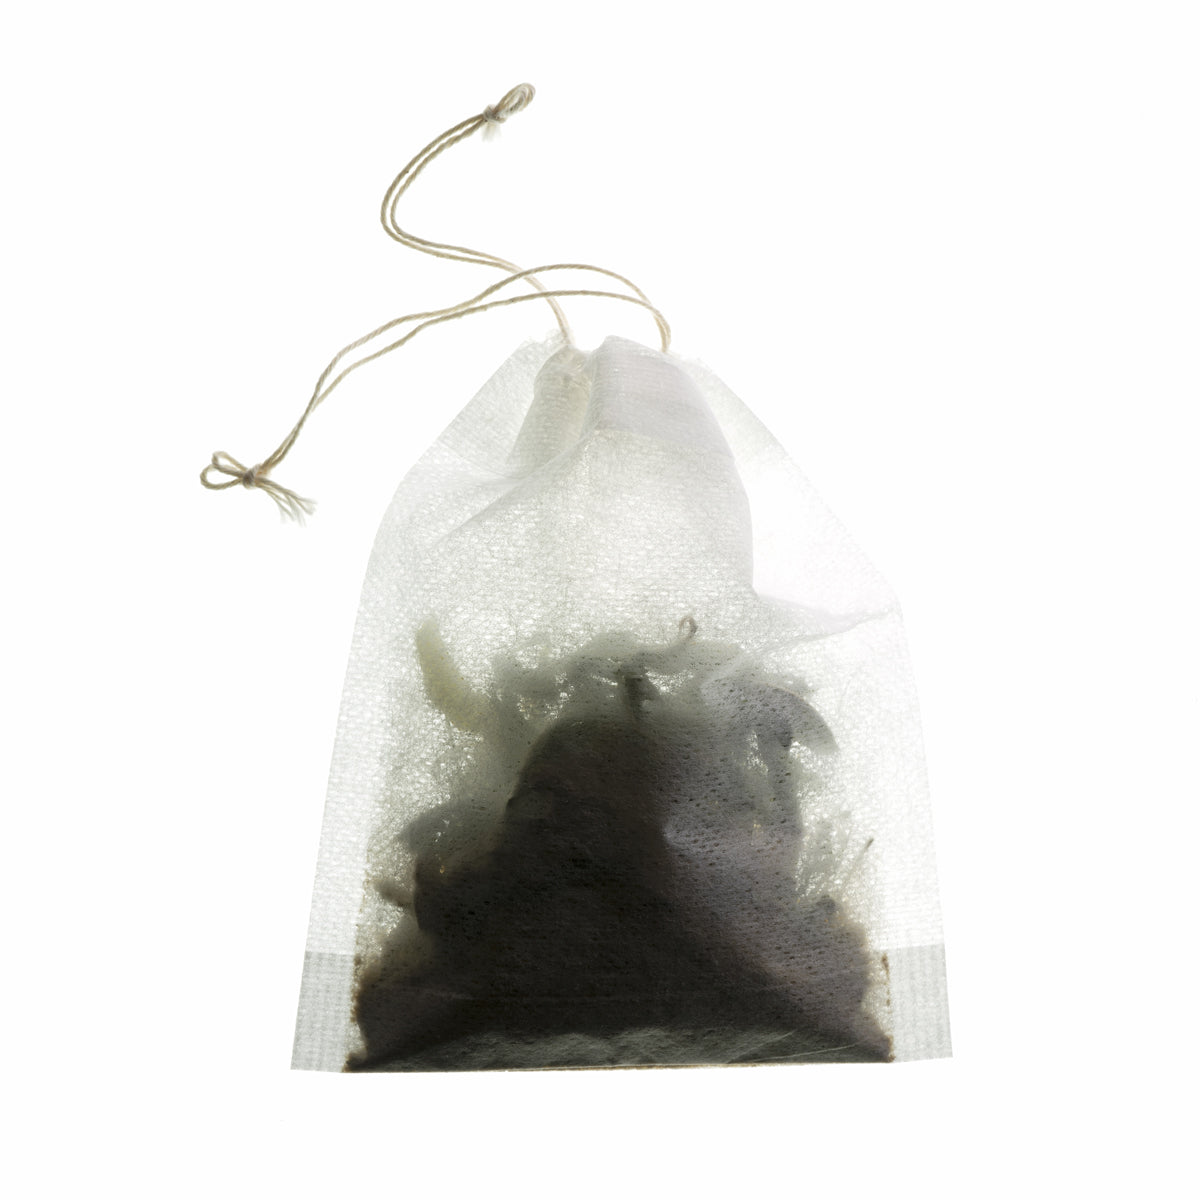 Single tea bag of RELAX 4PM tea by noosha